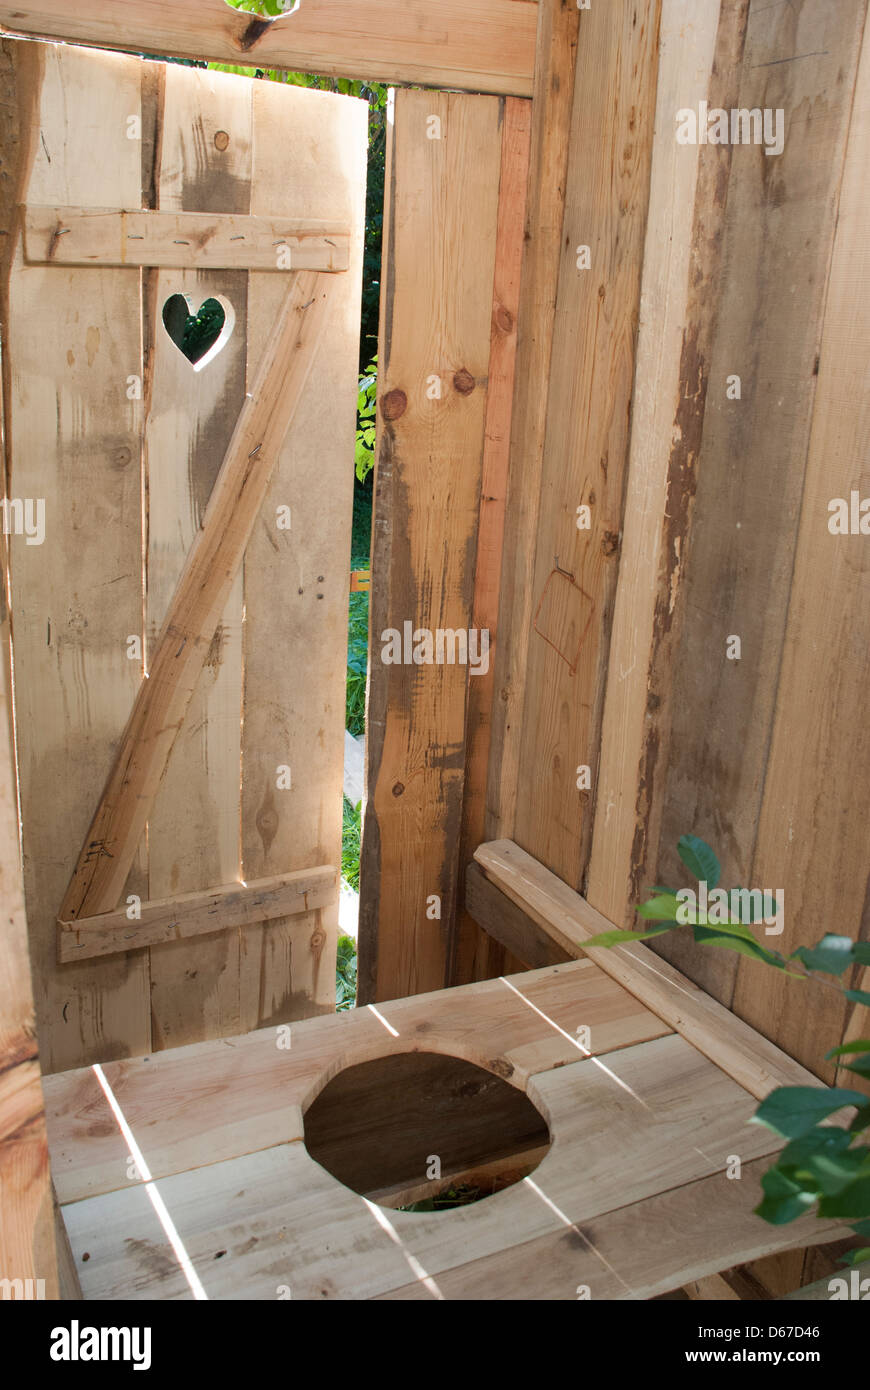 Wooden outdoors eco-toilet Stock Photo